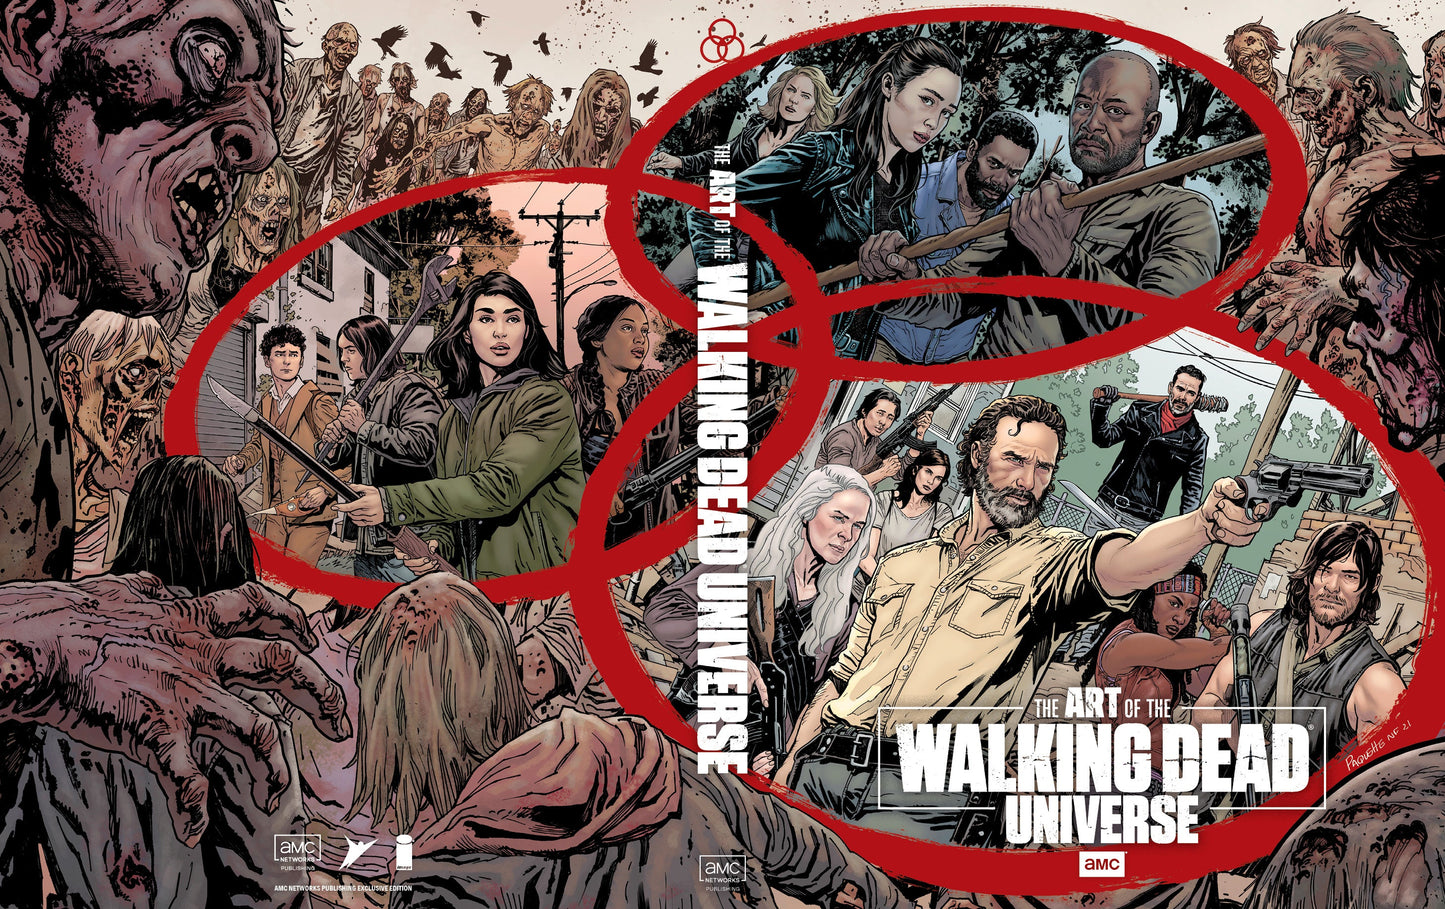 The Art of Amc's the Walking Dead Universe